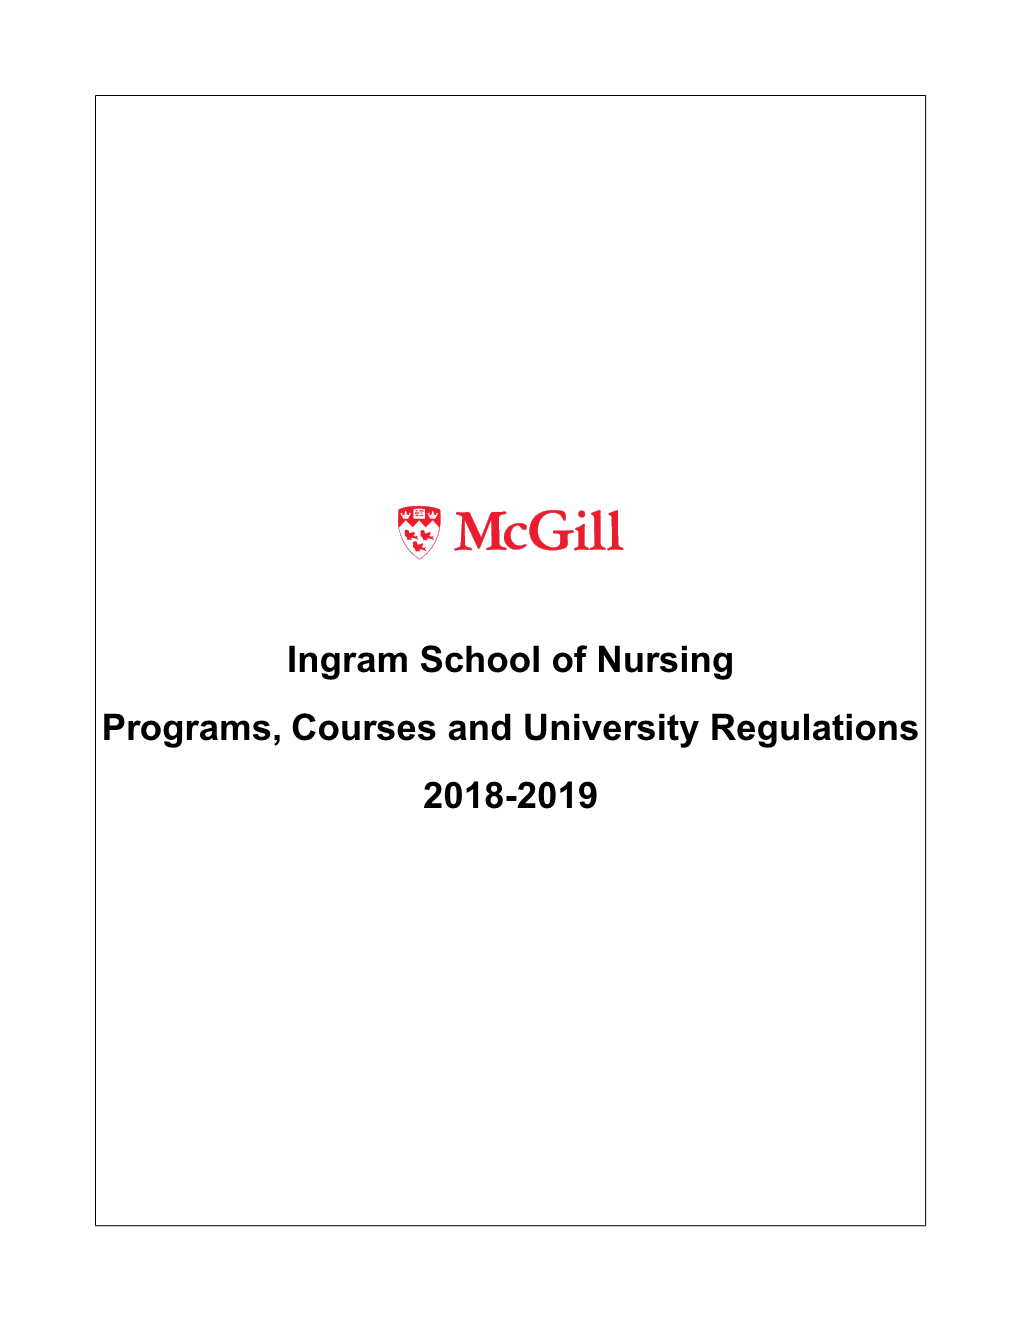 Ingram School of Nursing Programs, Courses and University Regulations 2018-2019